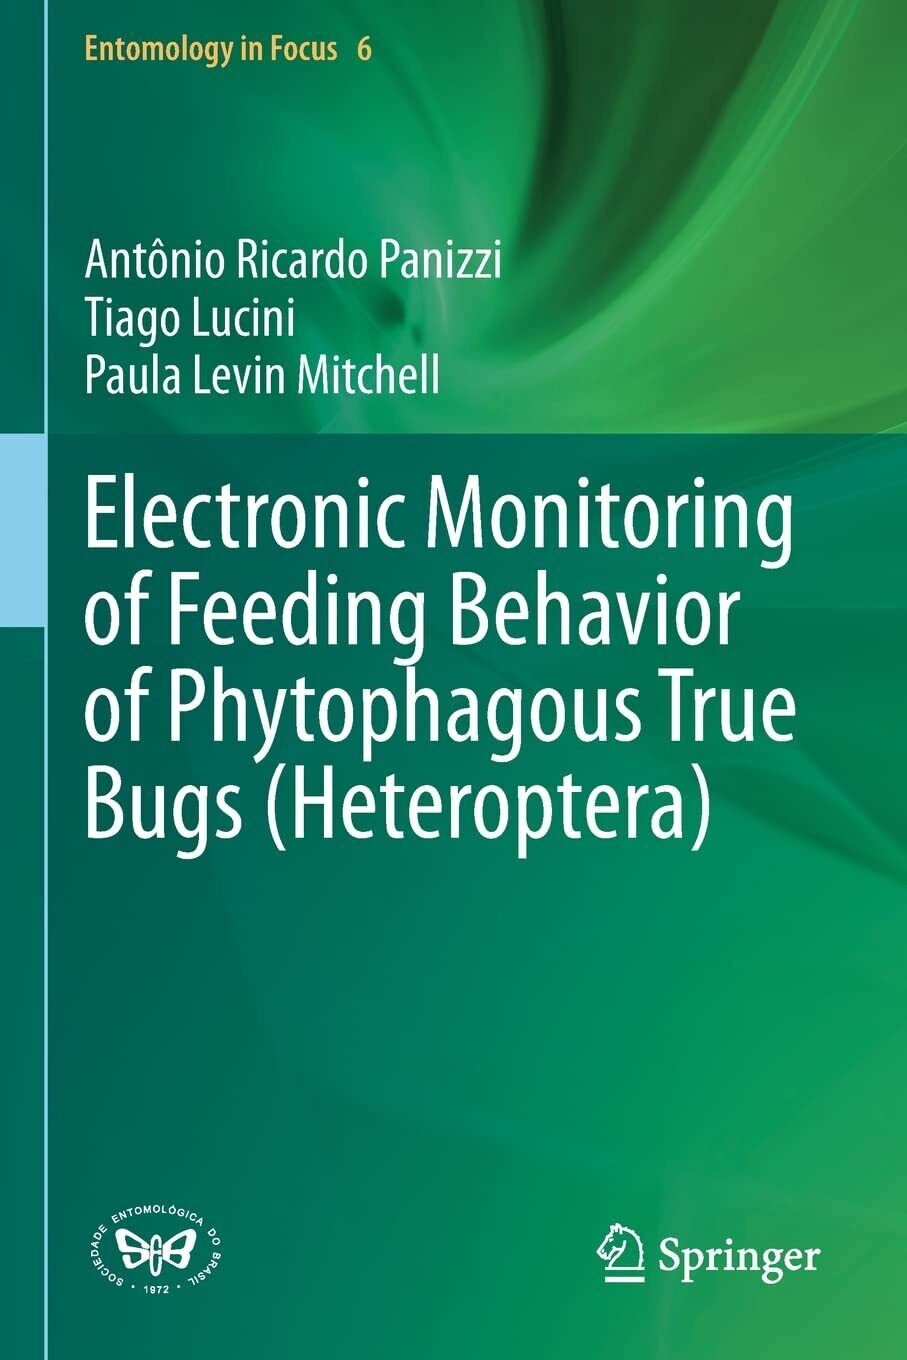 Electronic Monitoring of Feeding Behavior of Phytophagous True Bugs - 2022